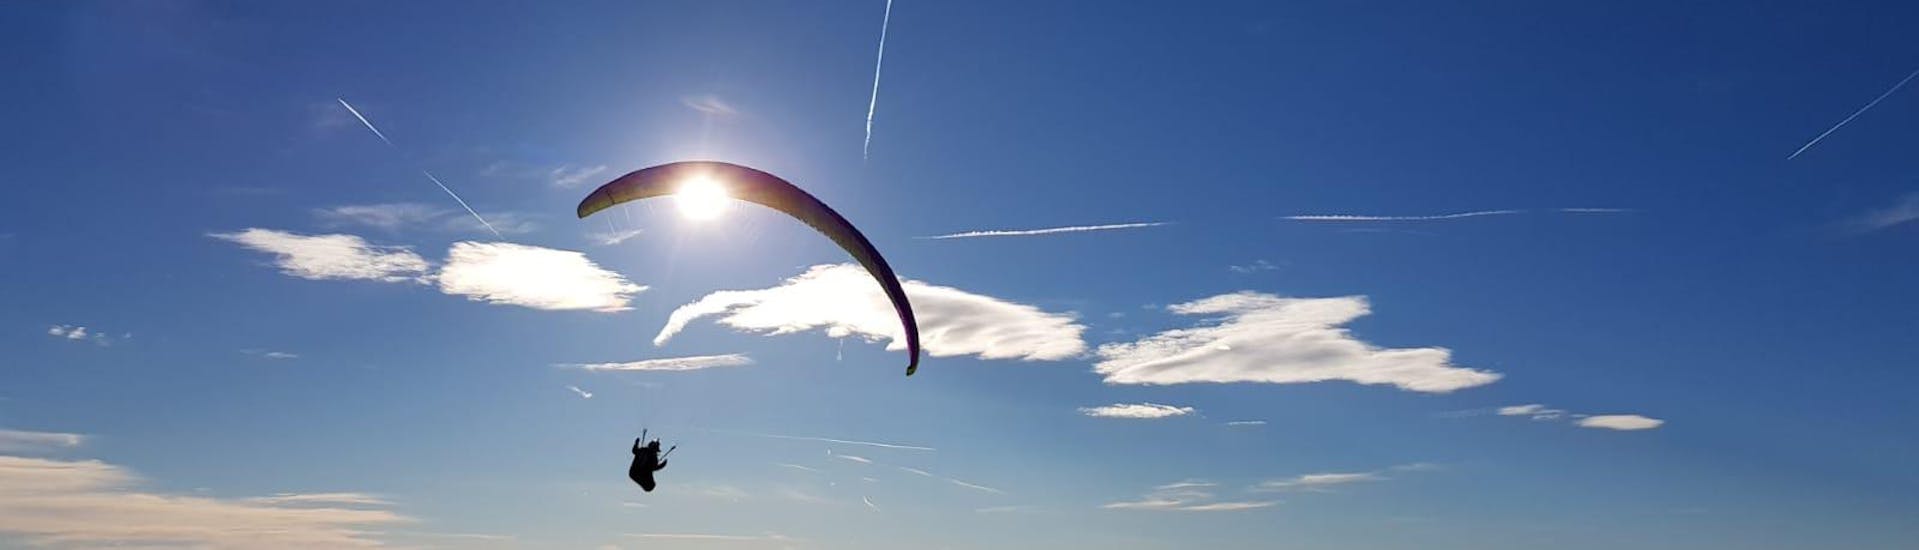 Tandem Paragliding "Like a Virgin" - Cà del Monte NO.